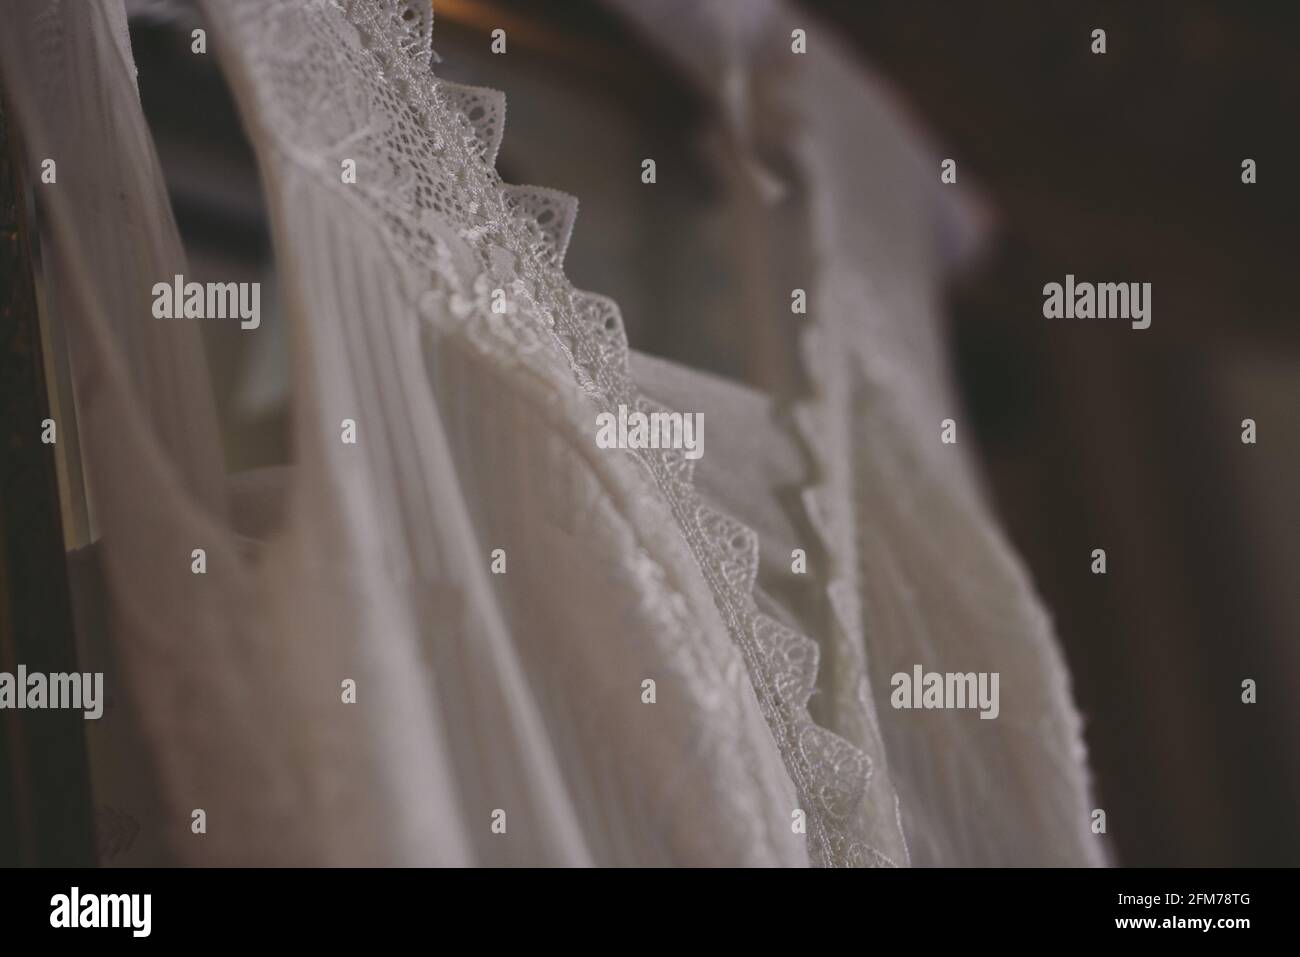 close up of a sleeveless lace wedding dress hanging Stock Photo